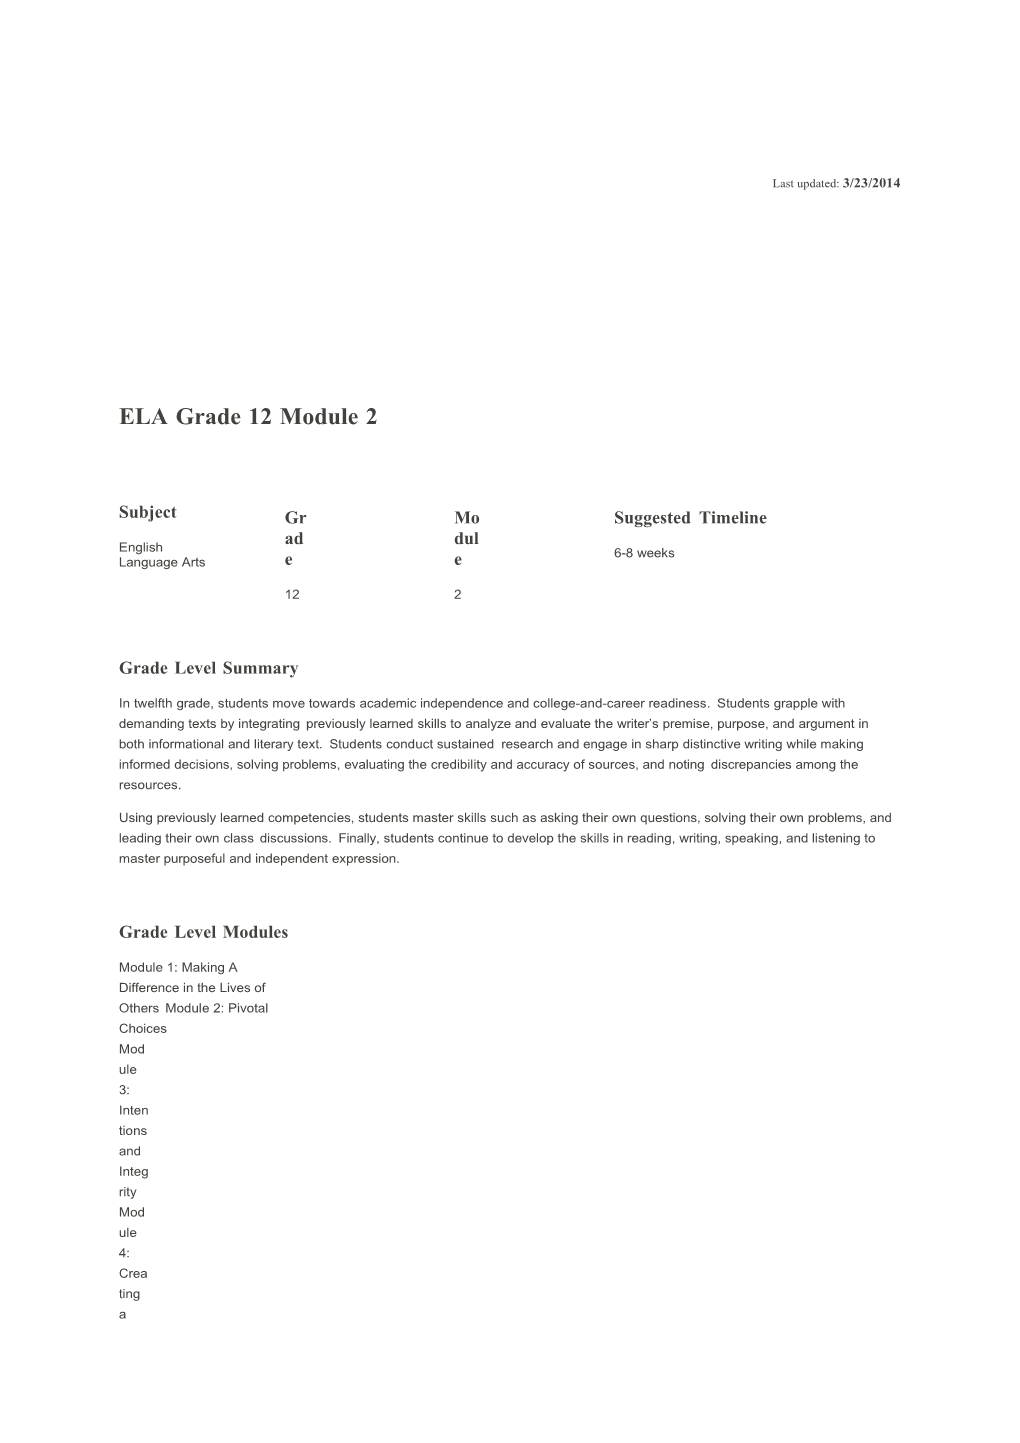 ELA Grade 12 Module 2